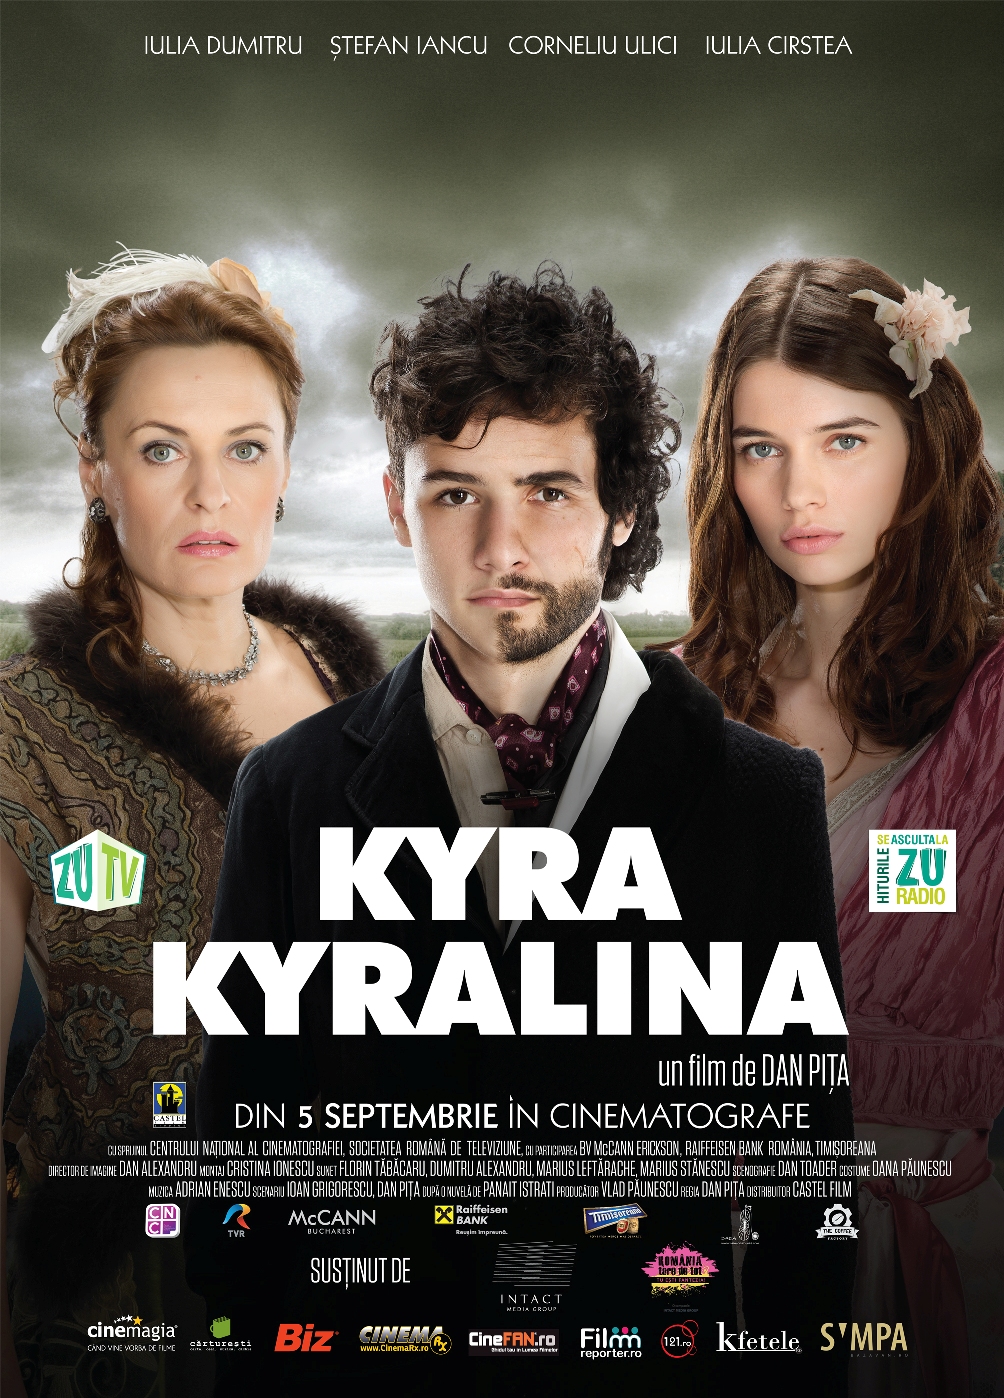 Kyra Kyralina (2012) - Photo